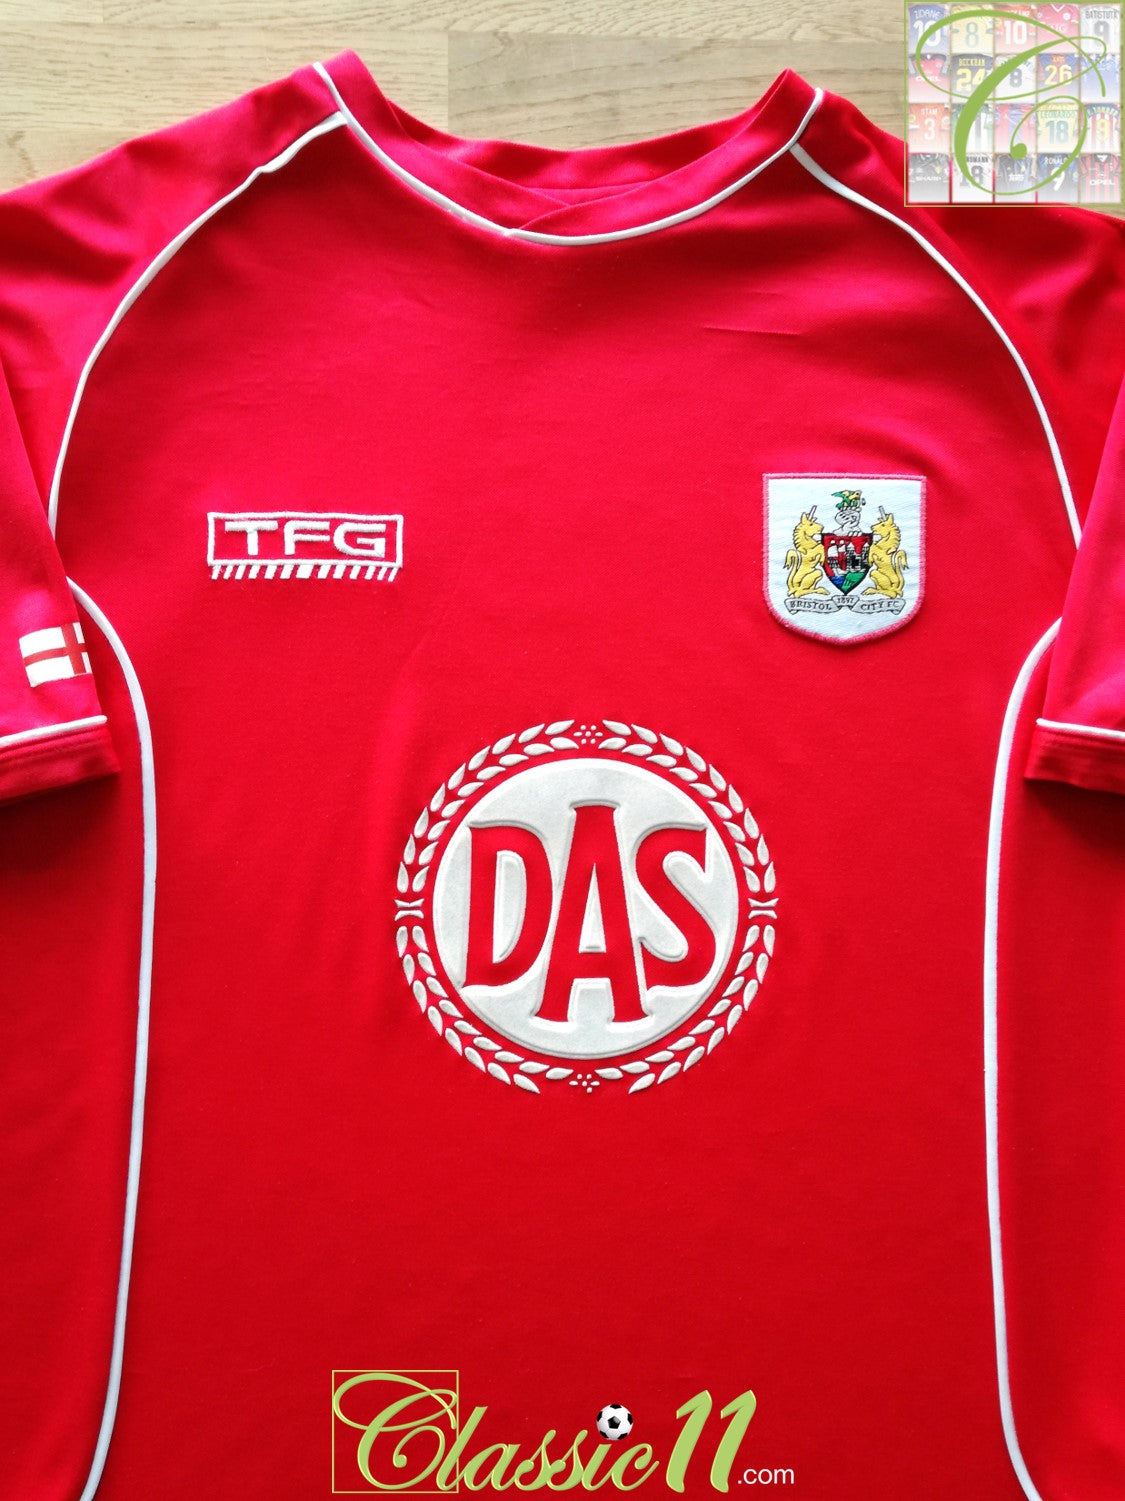 2002/03 Bristol City Home Football Shirt / Old TFG Jersey Classic Football Shirts